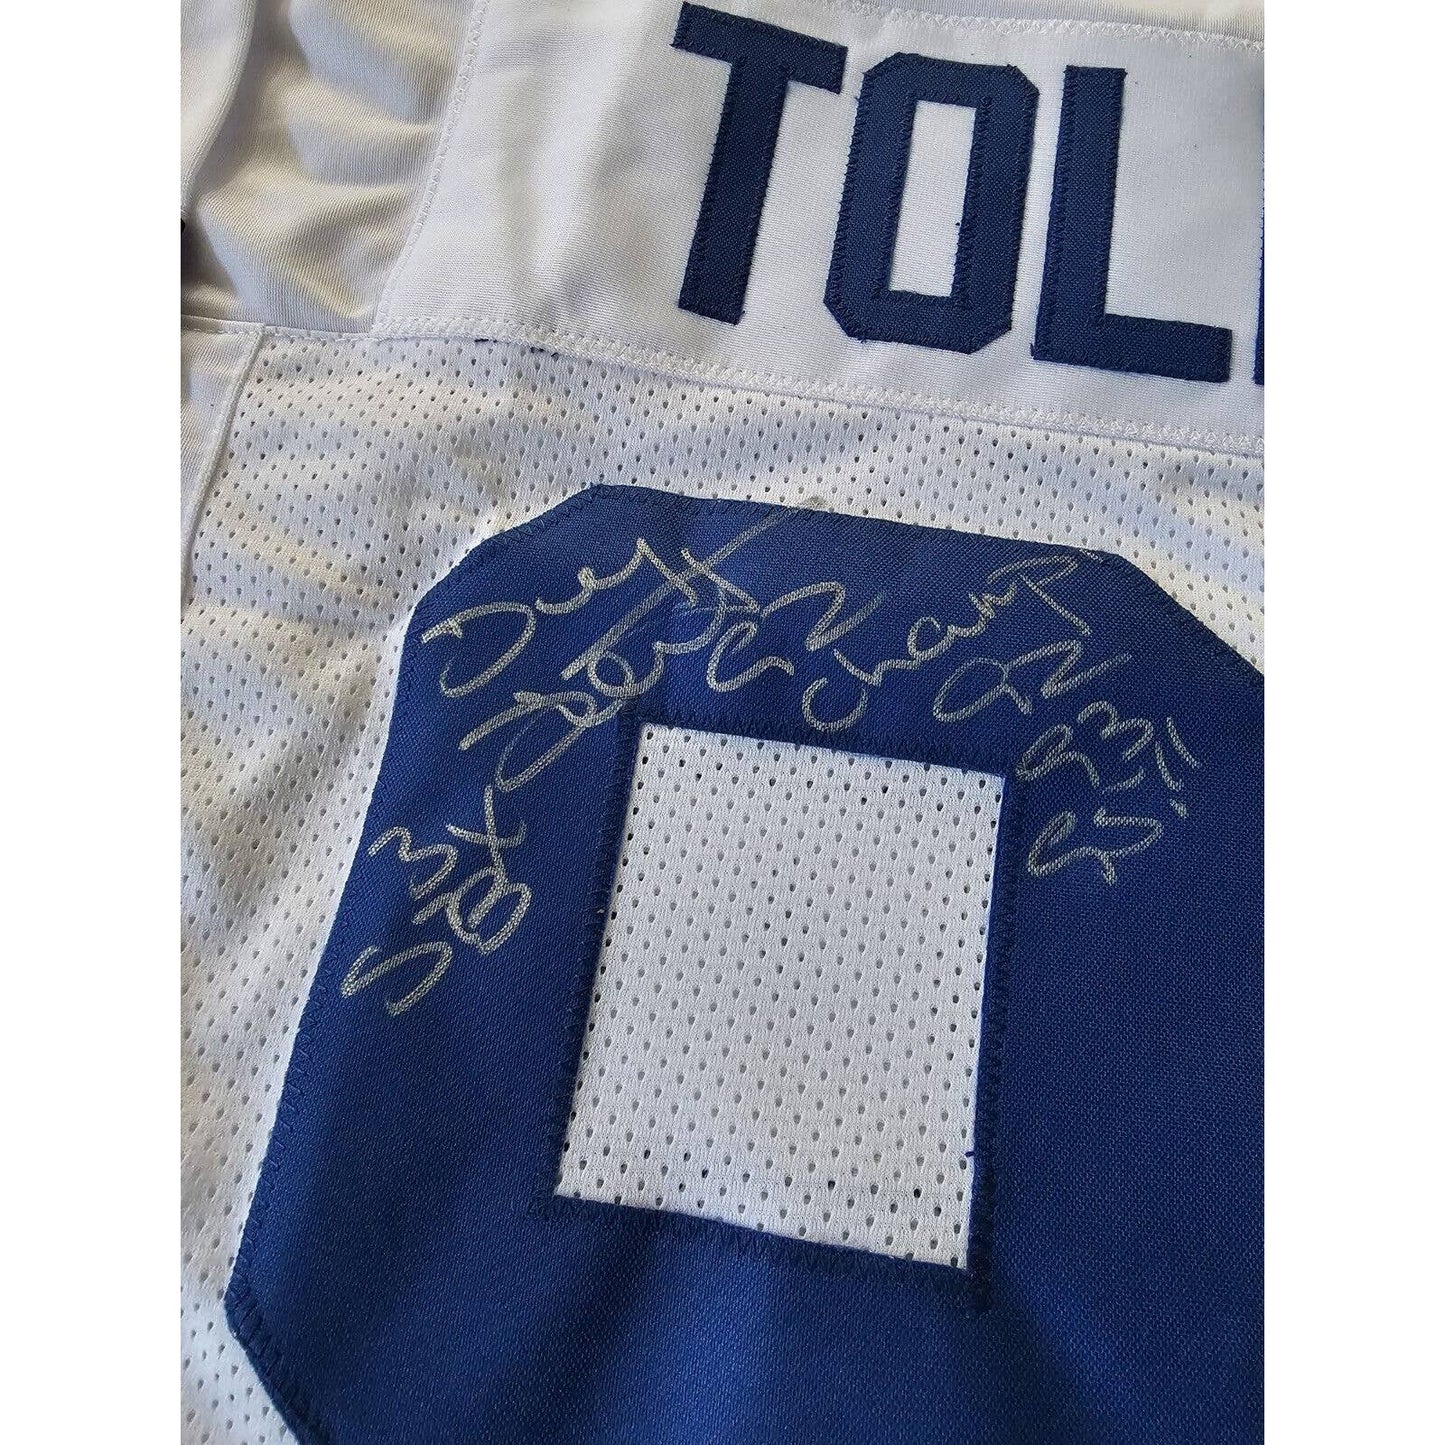 Tony Tolbert Autographed/Signed Jersey JSA COA Dallas Cowboys 3X SB Champ